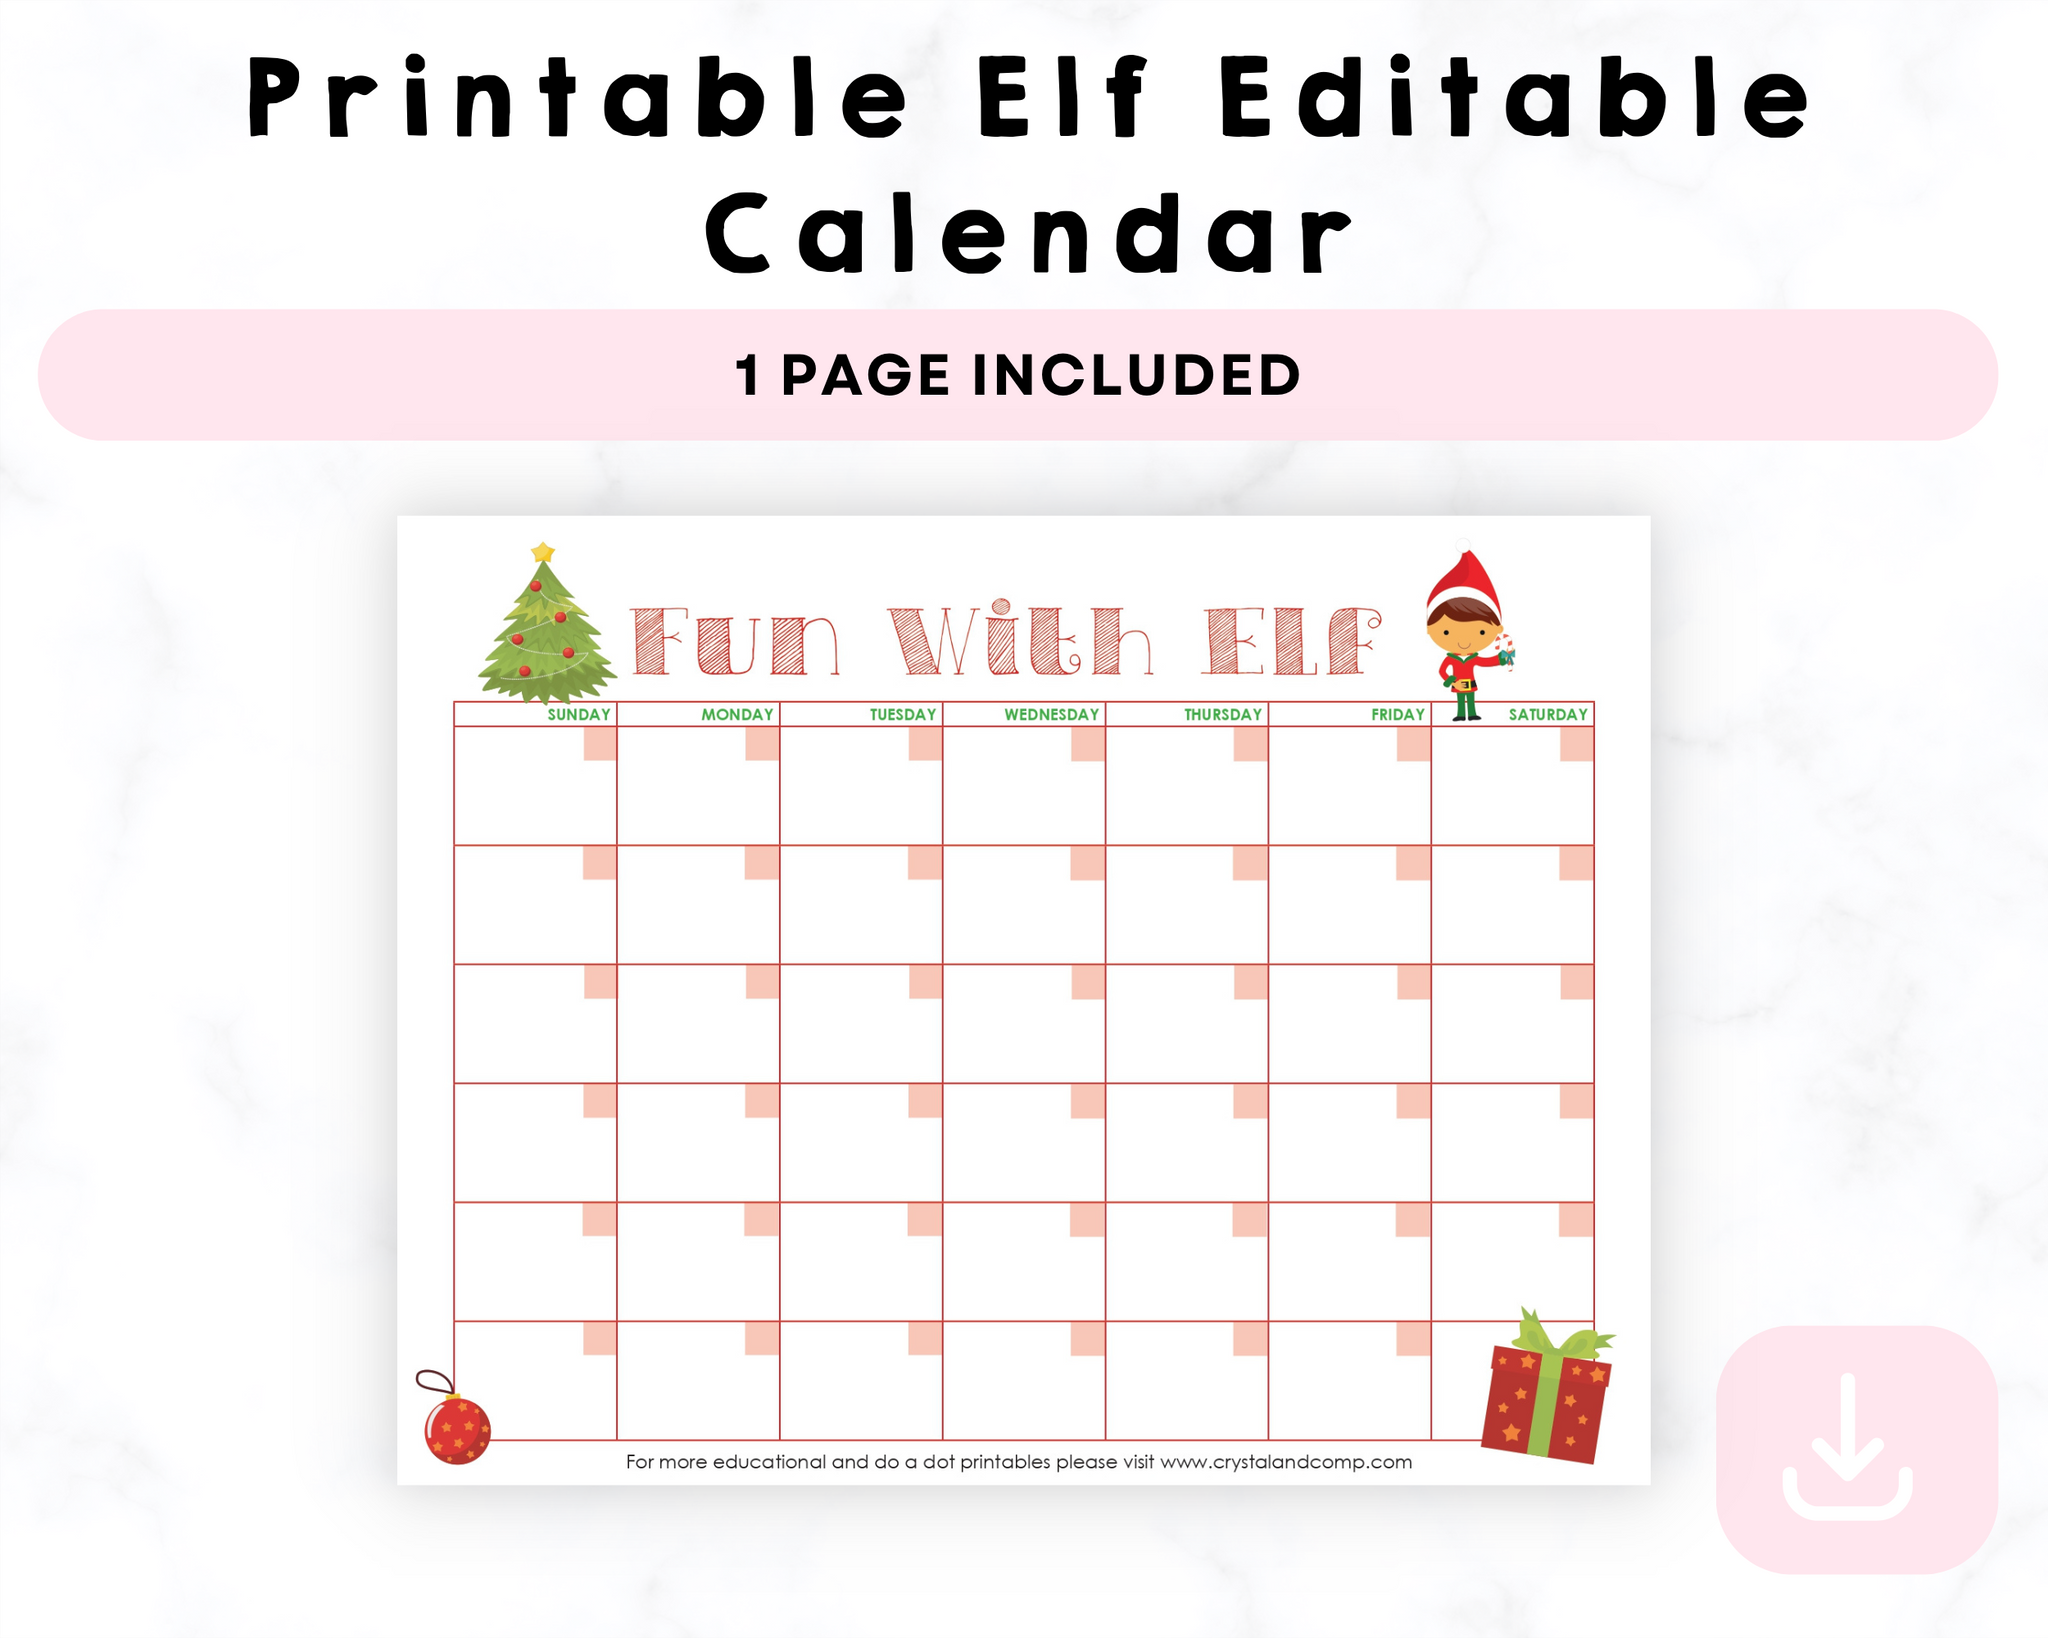 Printable Elf Editable Calendar – CrystalandComp